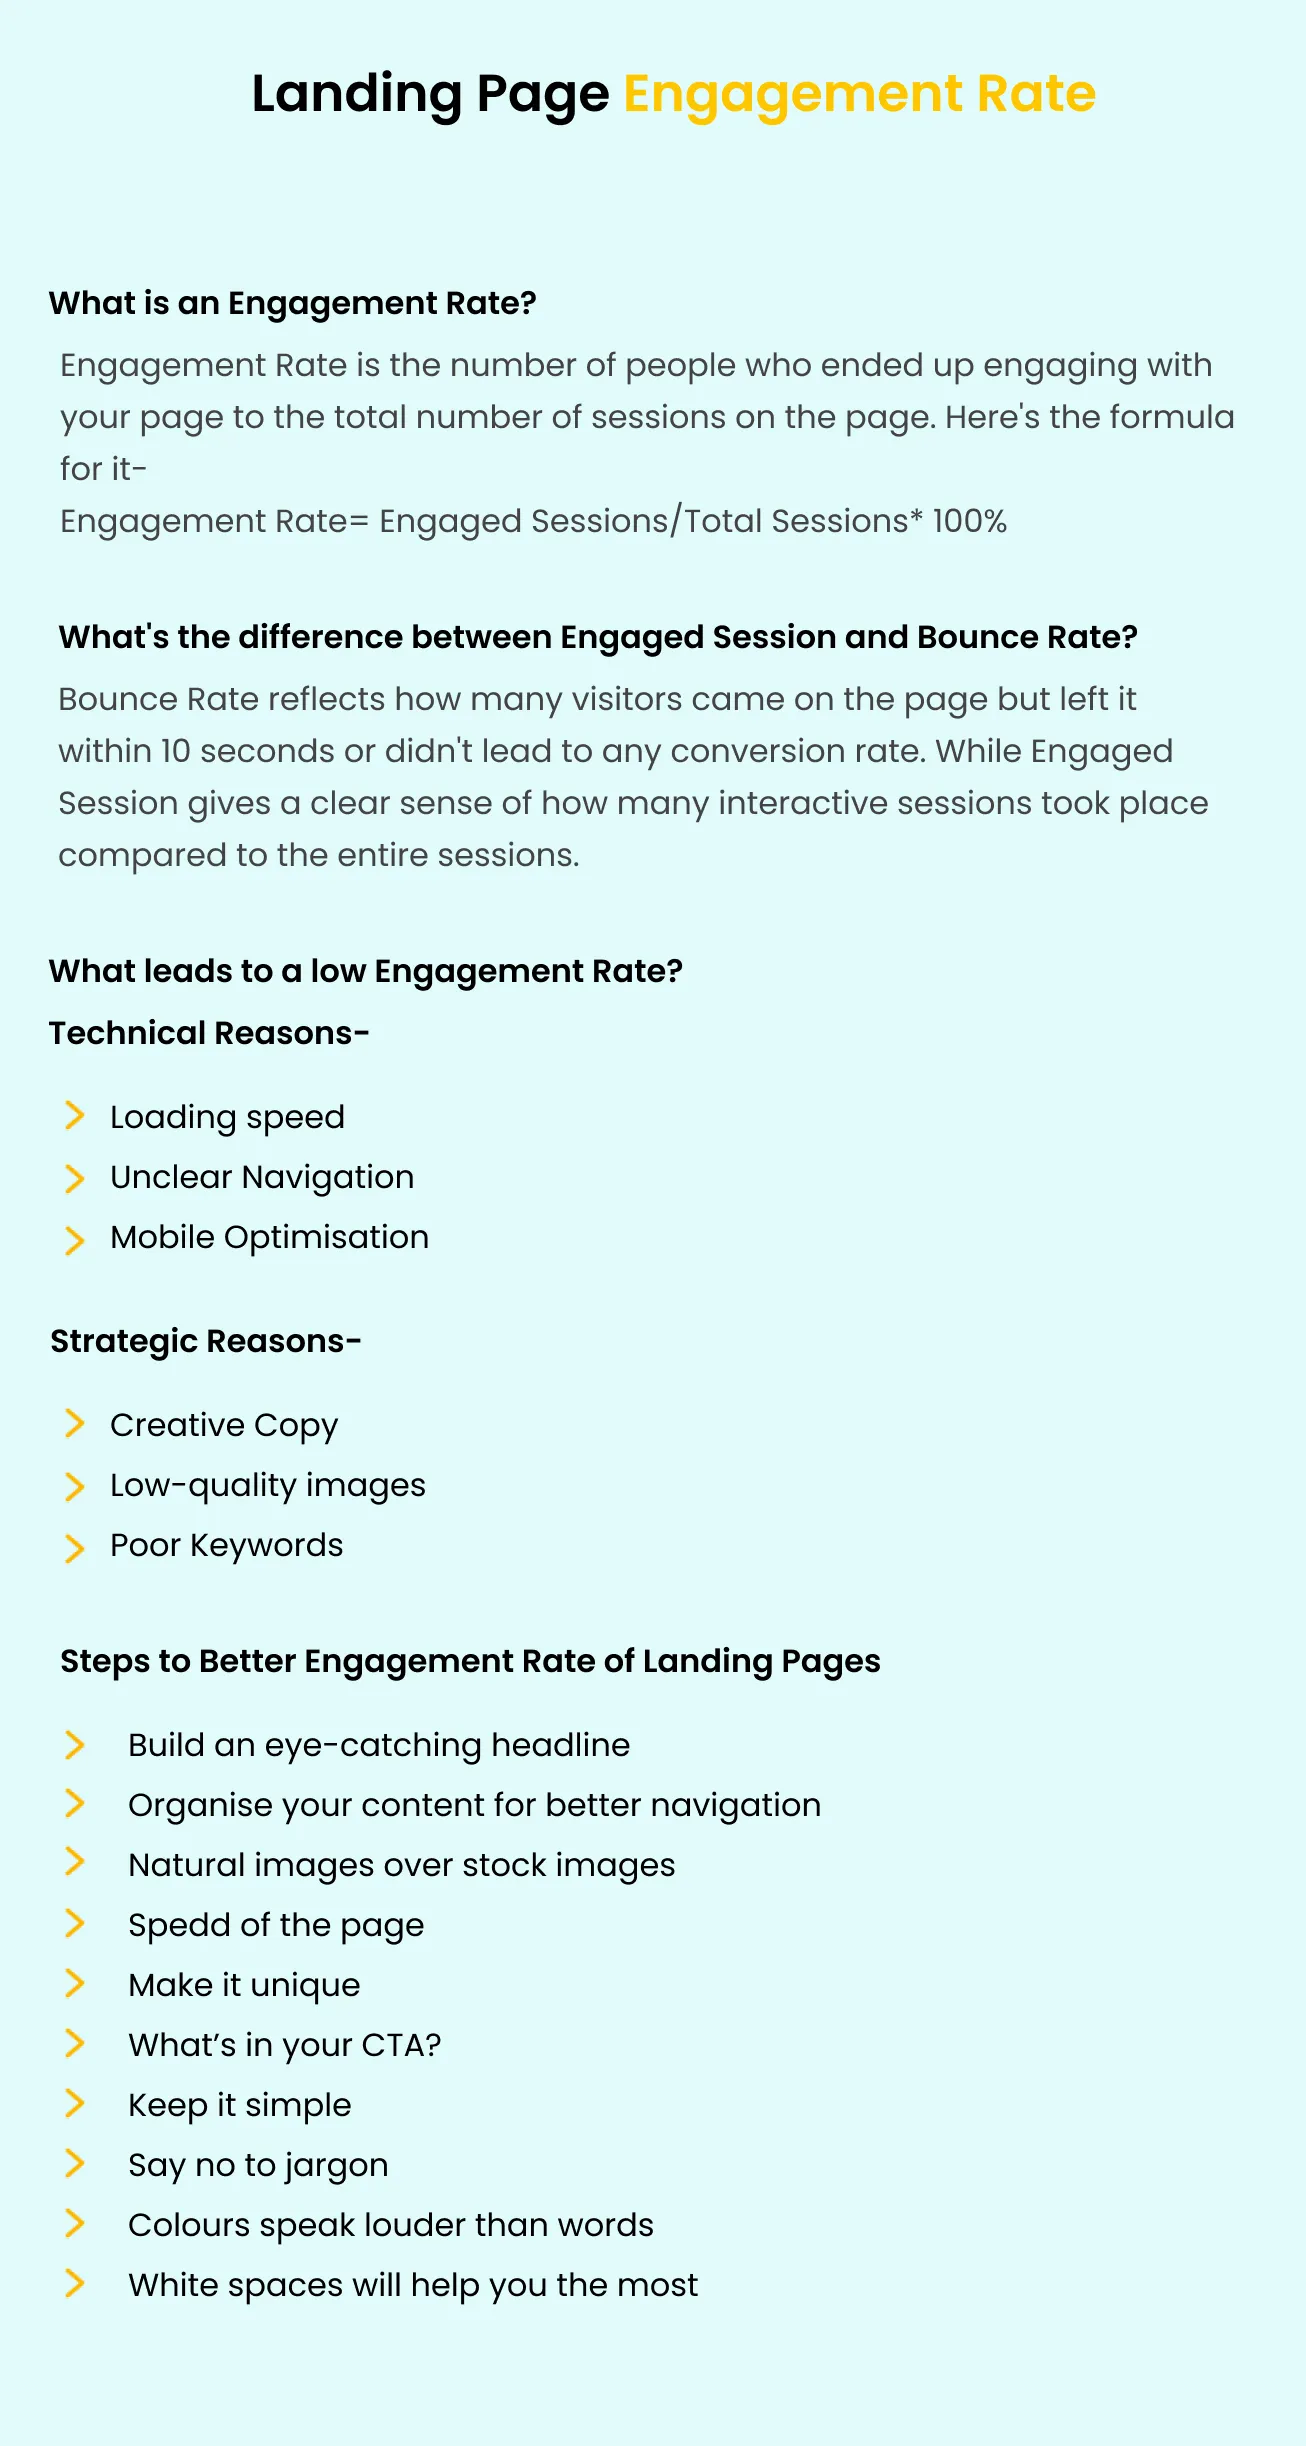 landing page engagement rate summary image.webp